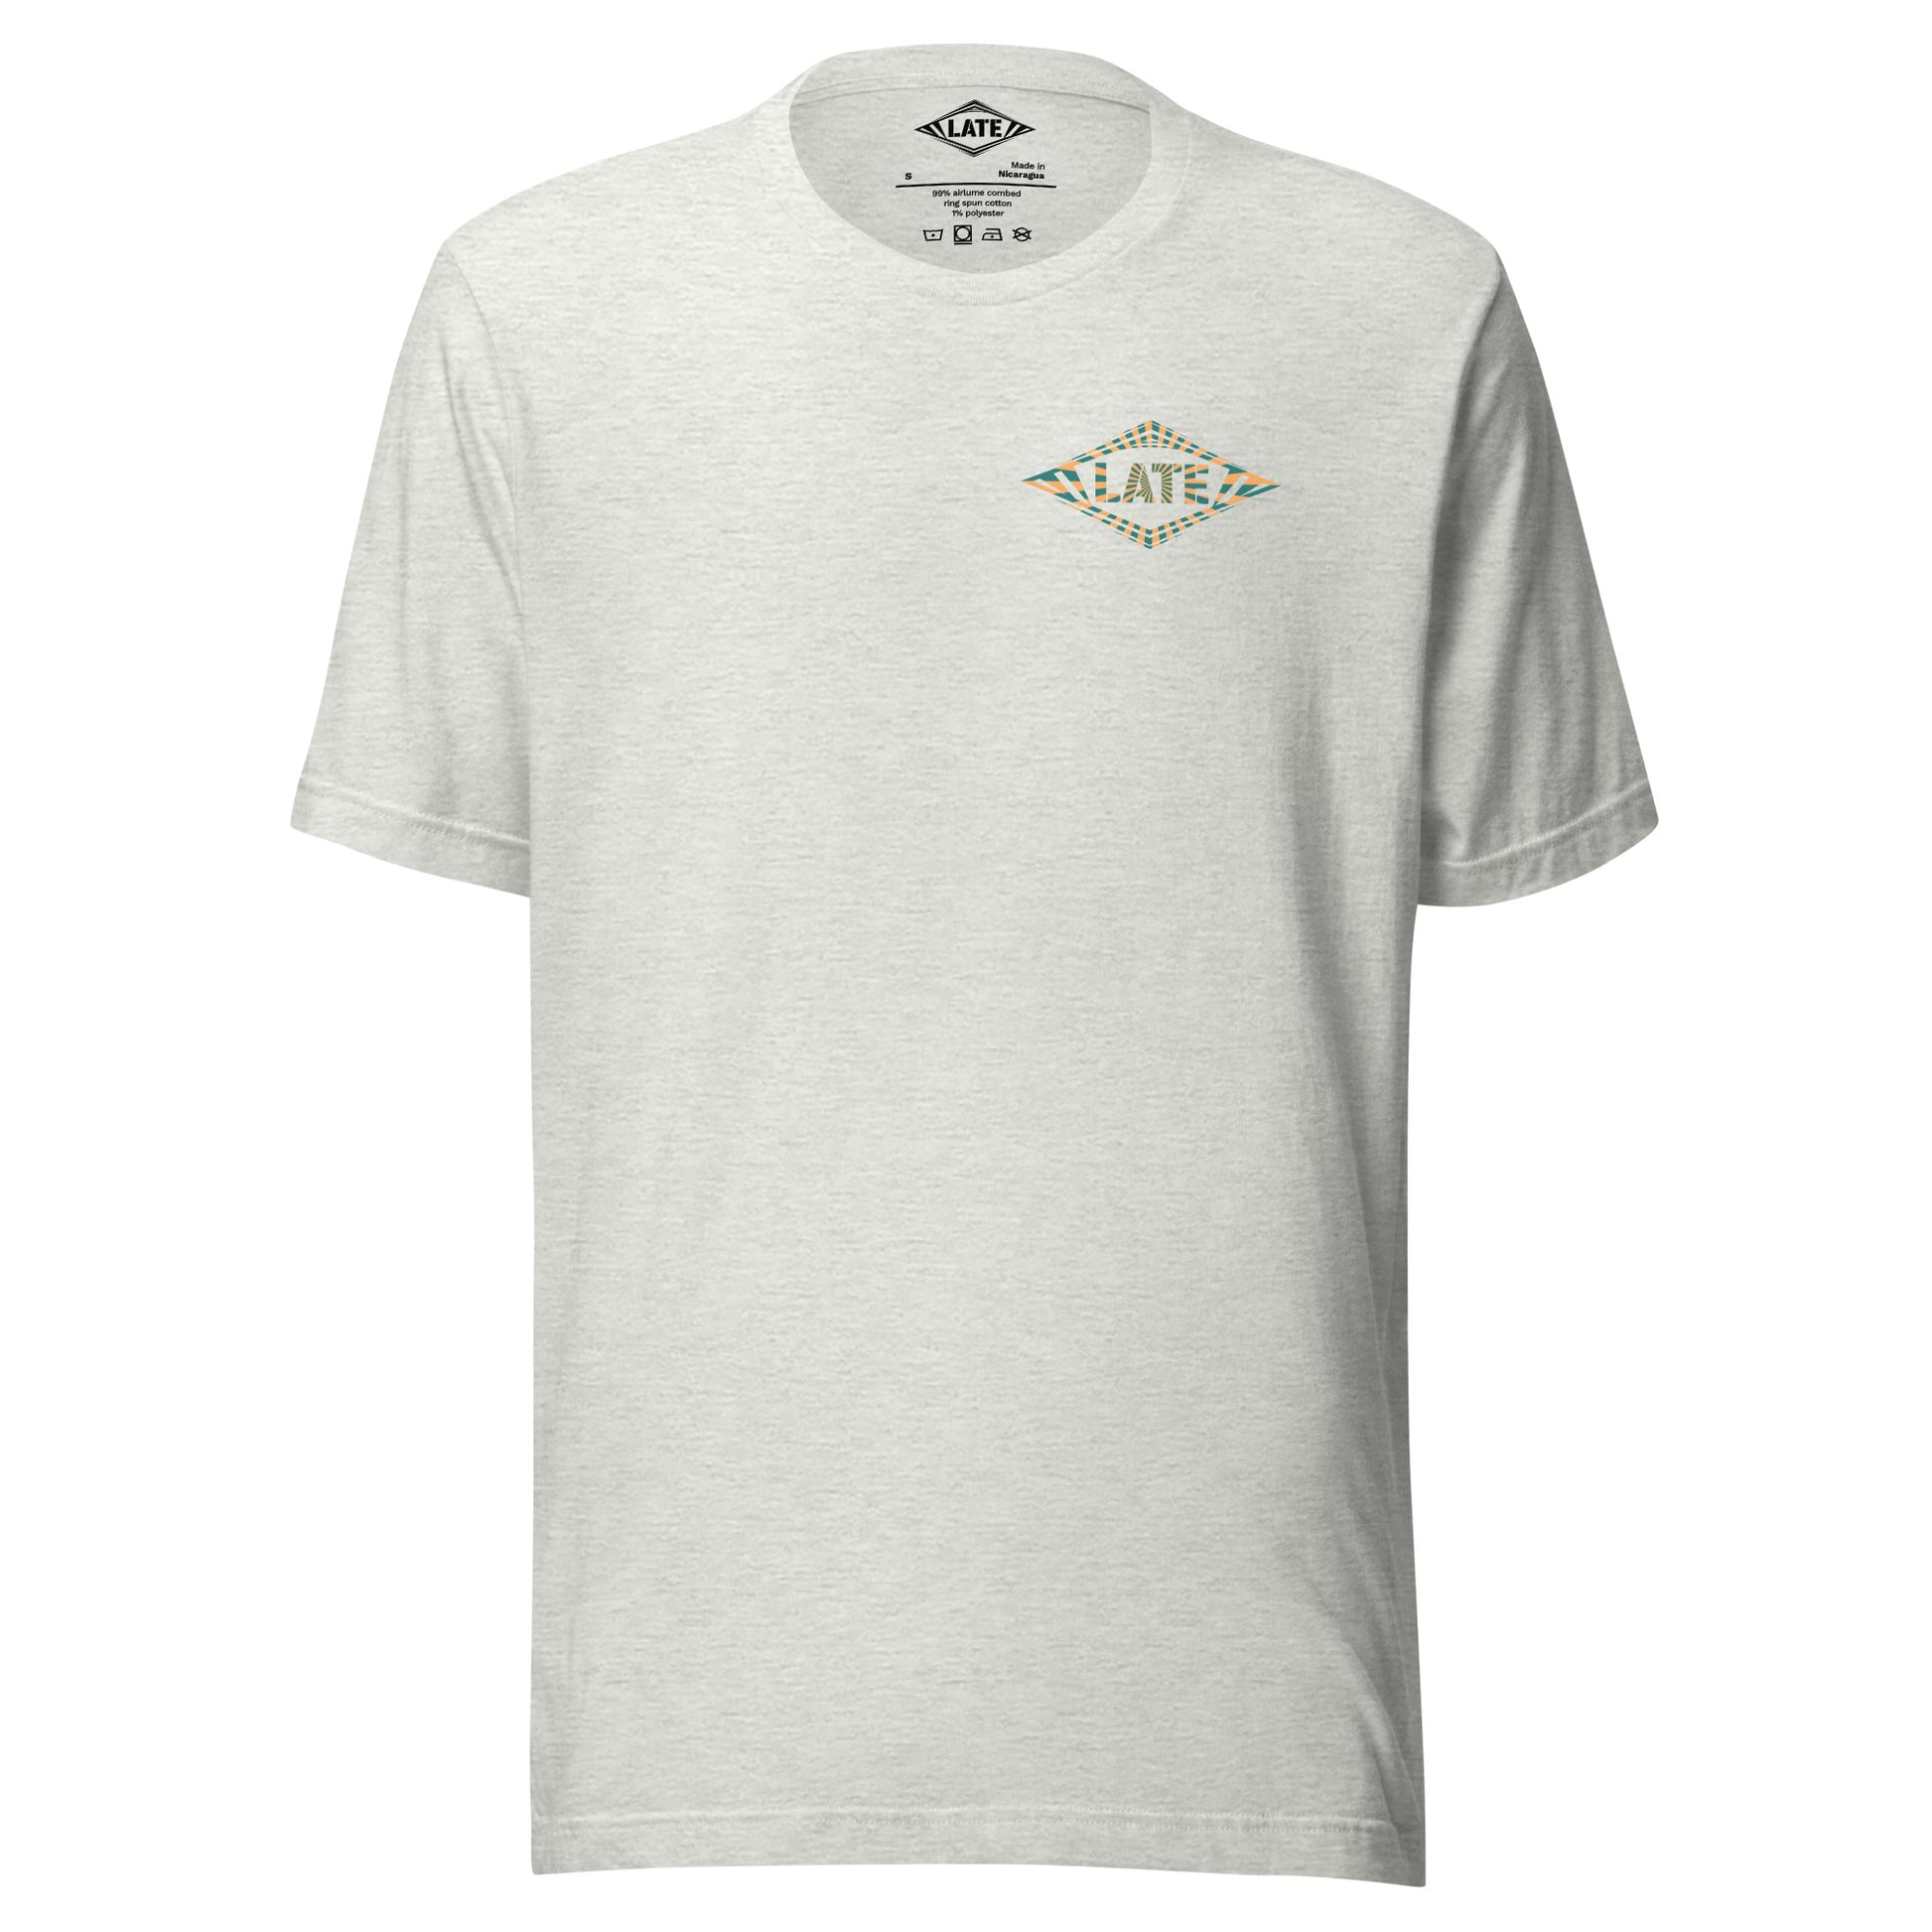 T-Shirt Walk Of Life logo Late surfing design old school hippie tshirt couleur gris